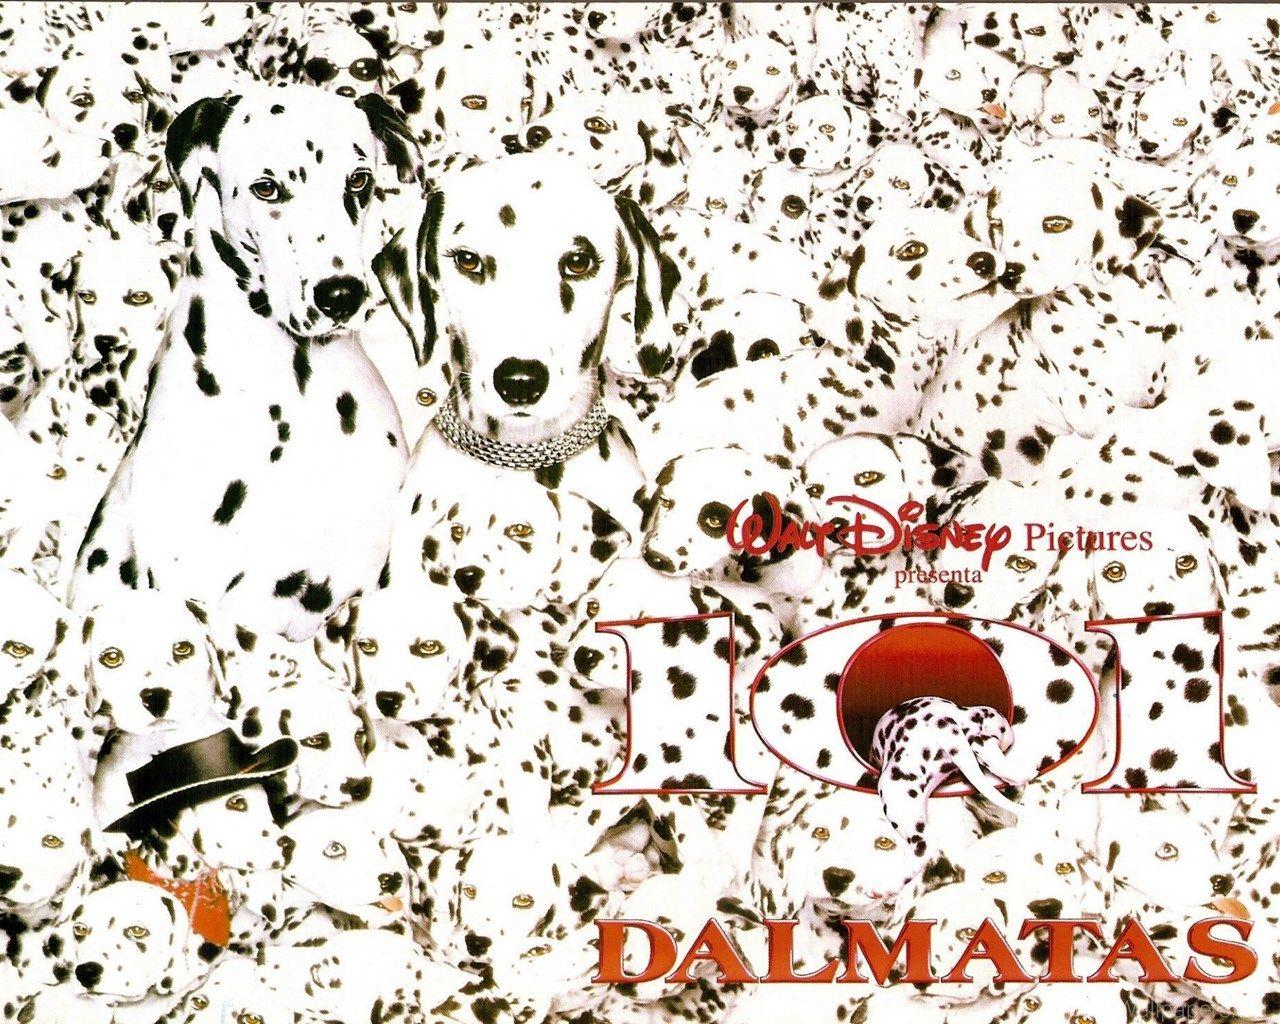 DALMATIANS Comedy Adventure Family Dog Puppy 100 Dalmatians